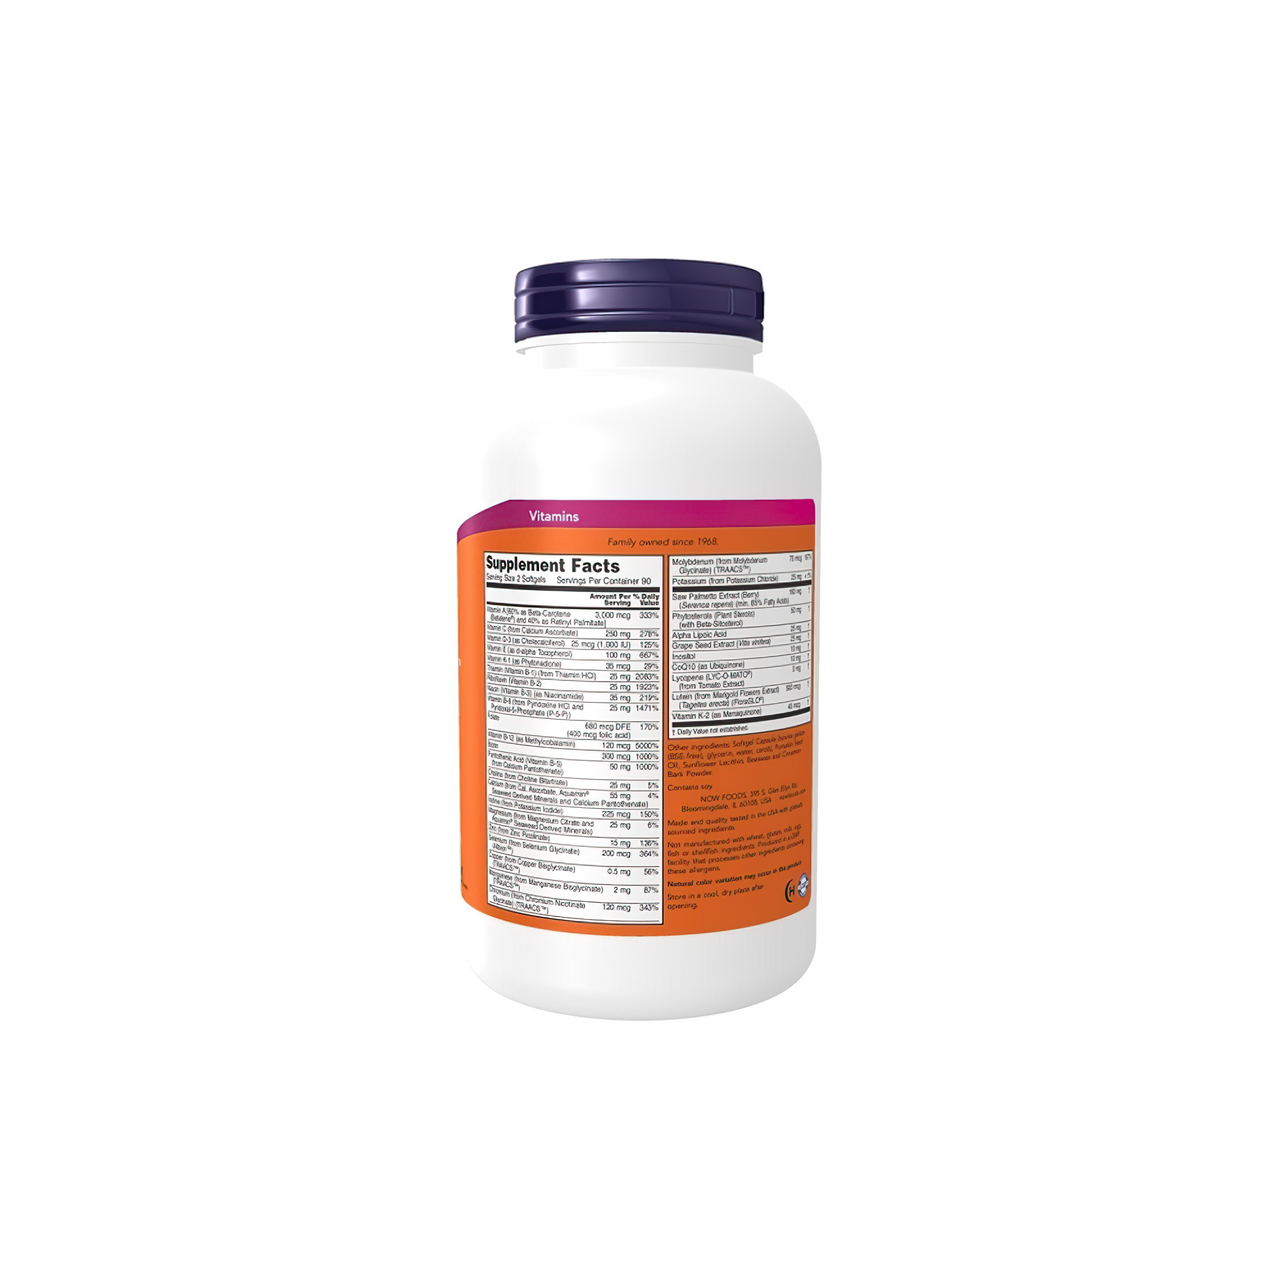 Un frasco de Now Foods ADAM Multivitamins & Minerals for Man 180 sgel sobre fondo blanco.